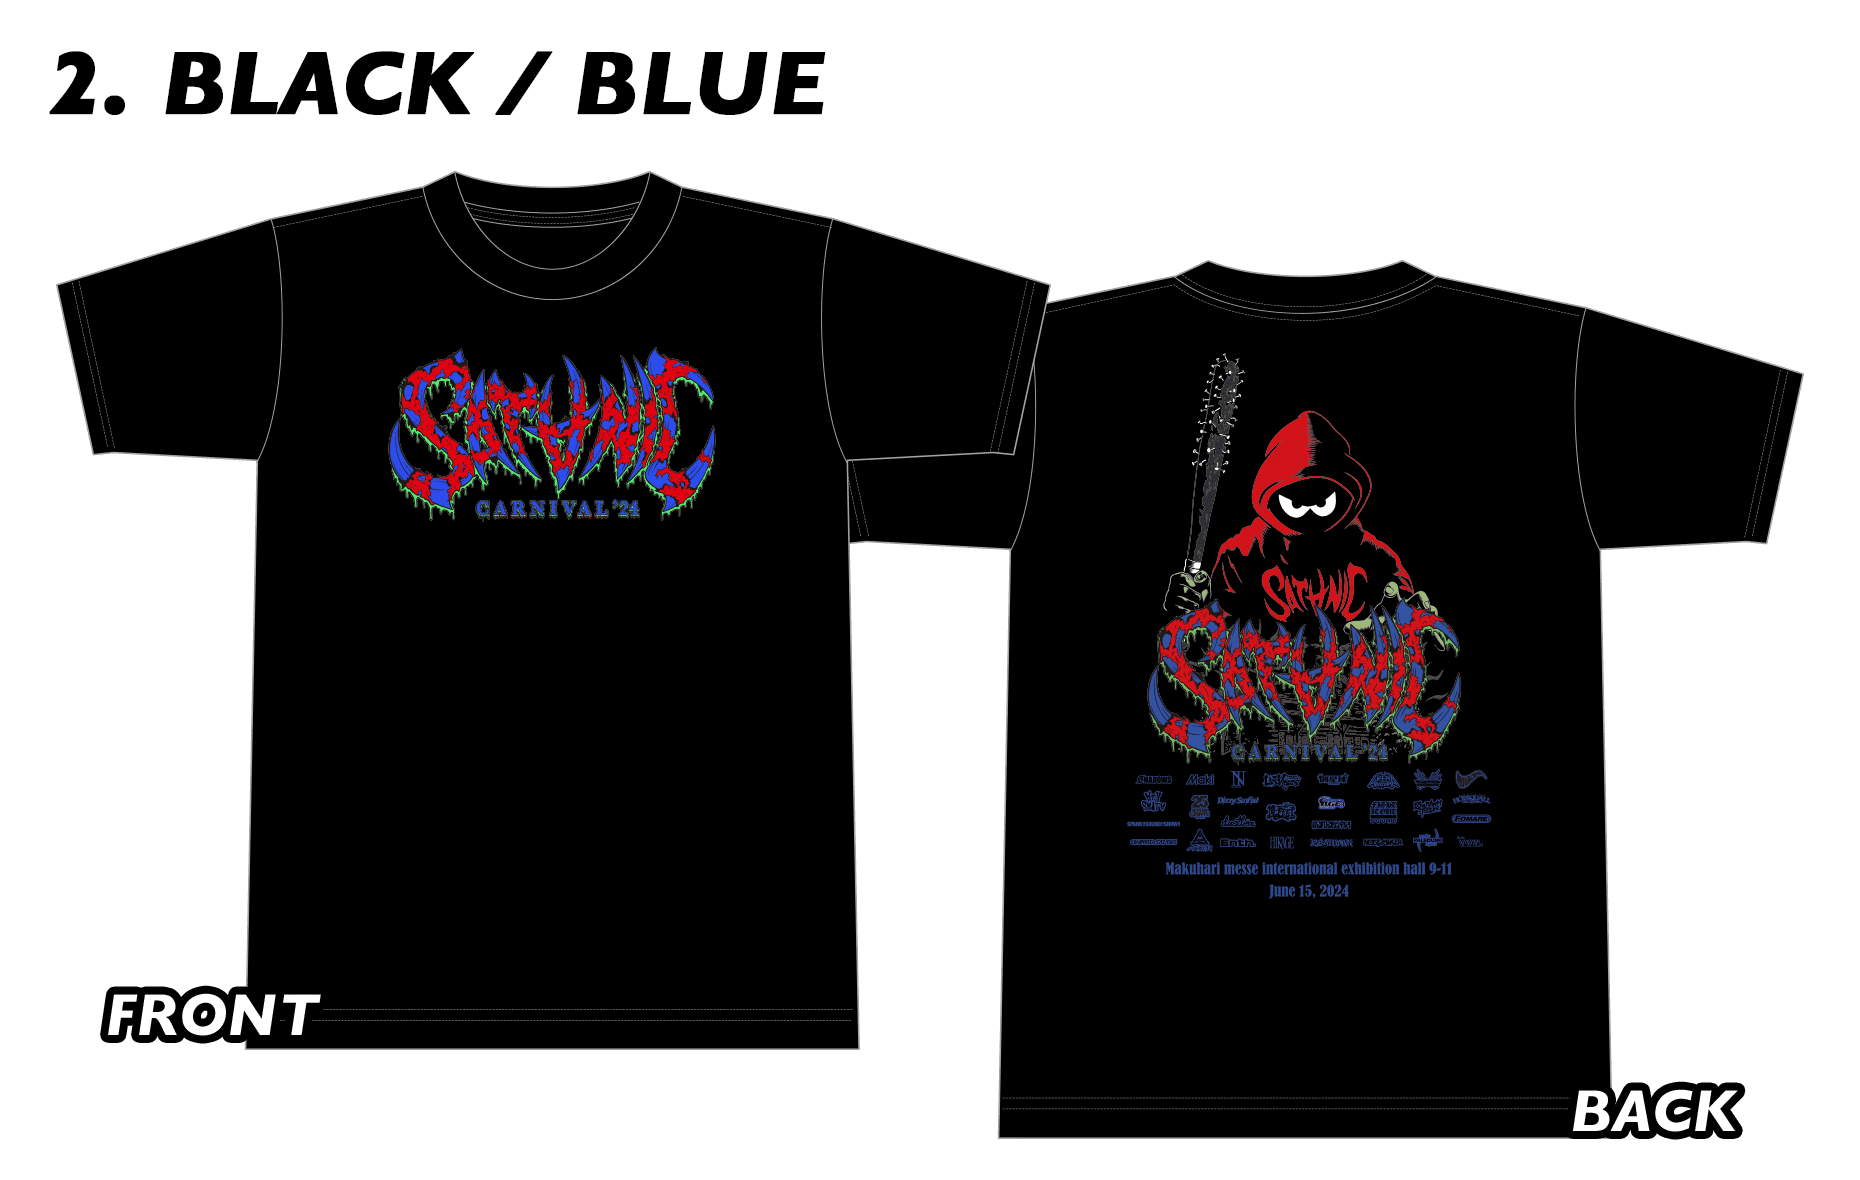 2. BLACK / BLUE